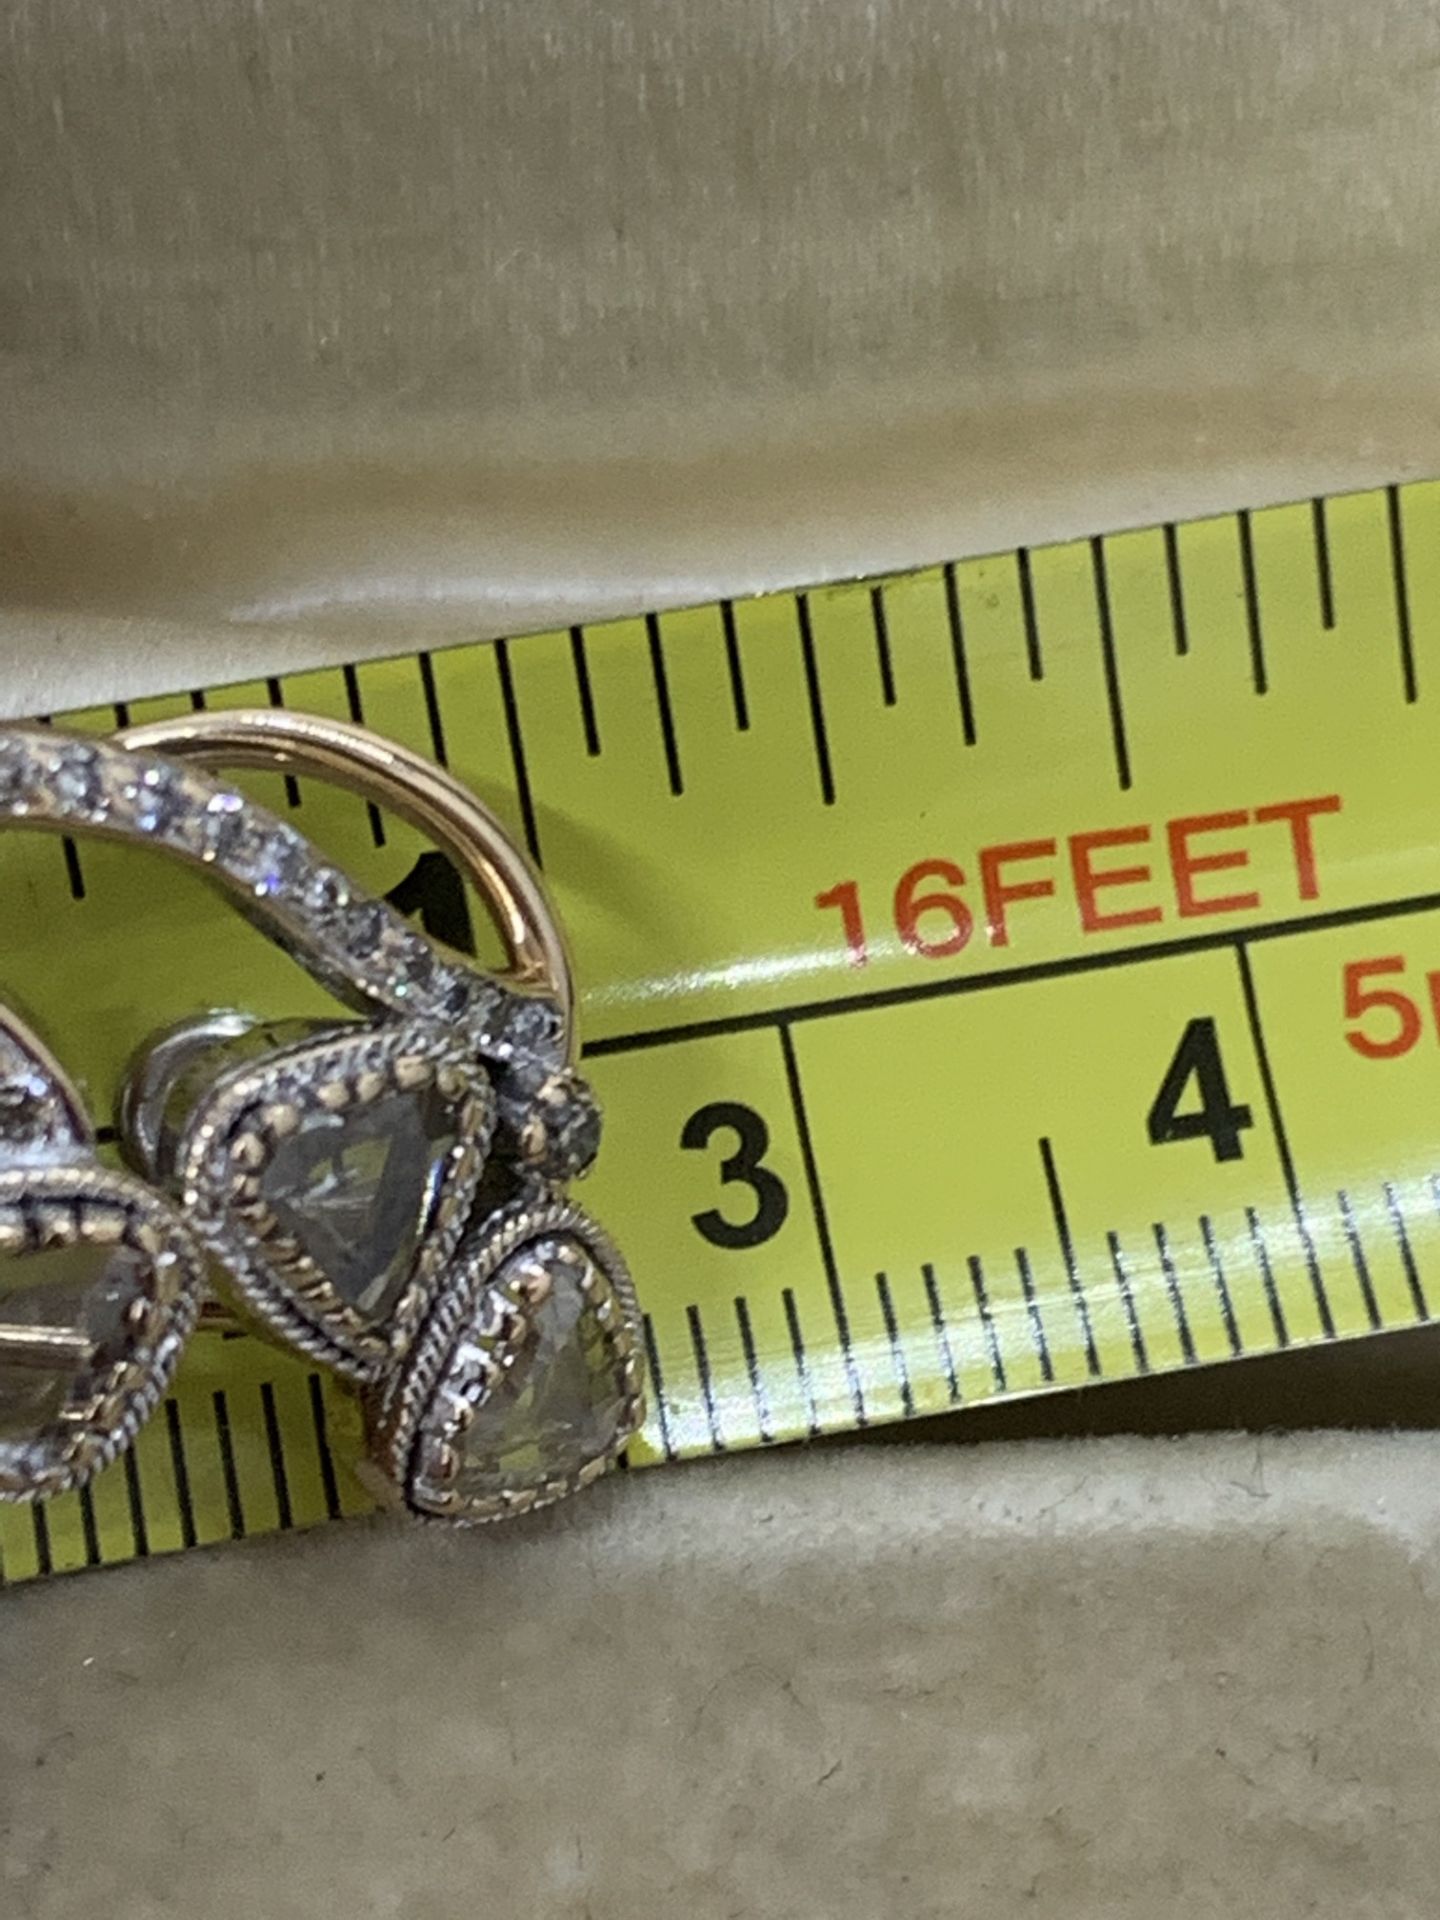 18ct GOLD ROSE CUT DIAMOND EARRINGS 15.6 GRAMS - Image 6 of 6